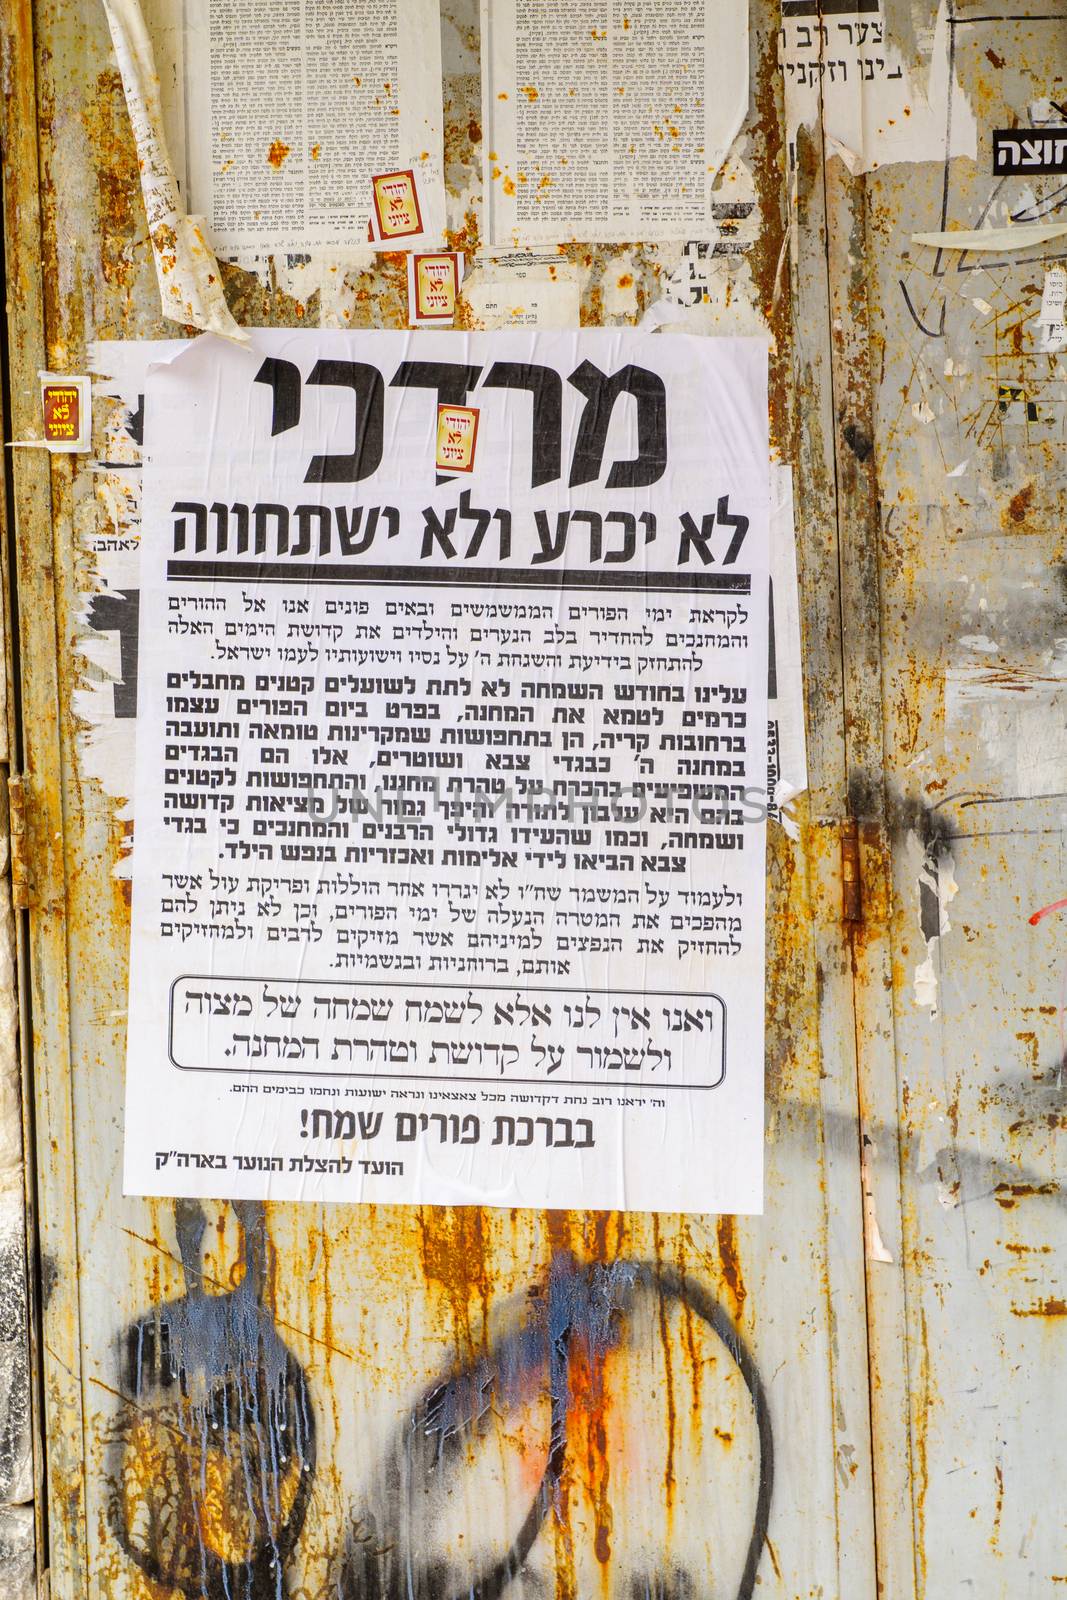 JERUSALEM, ISRAEL - MARCH 25, 2016: Pashkevil posters, of the orthodox Jewish community, about the Purim Holyday, in the ultra-orthodox neighborhood Mea Shearim, Jerusalem, Israel